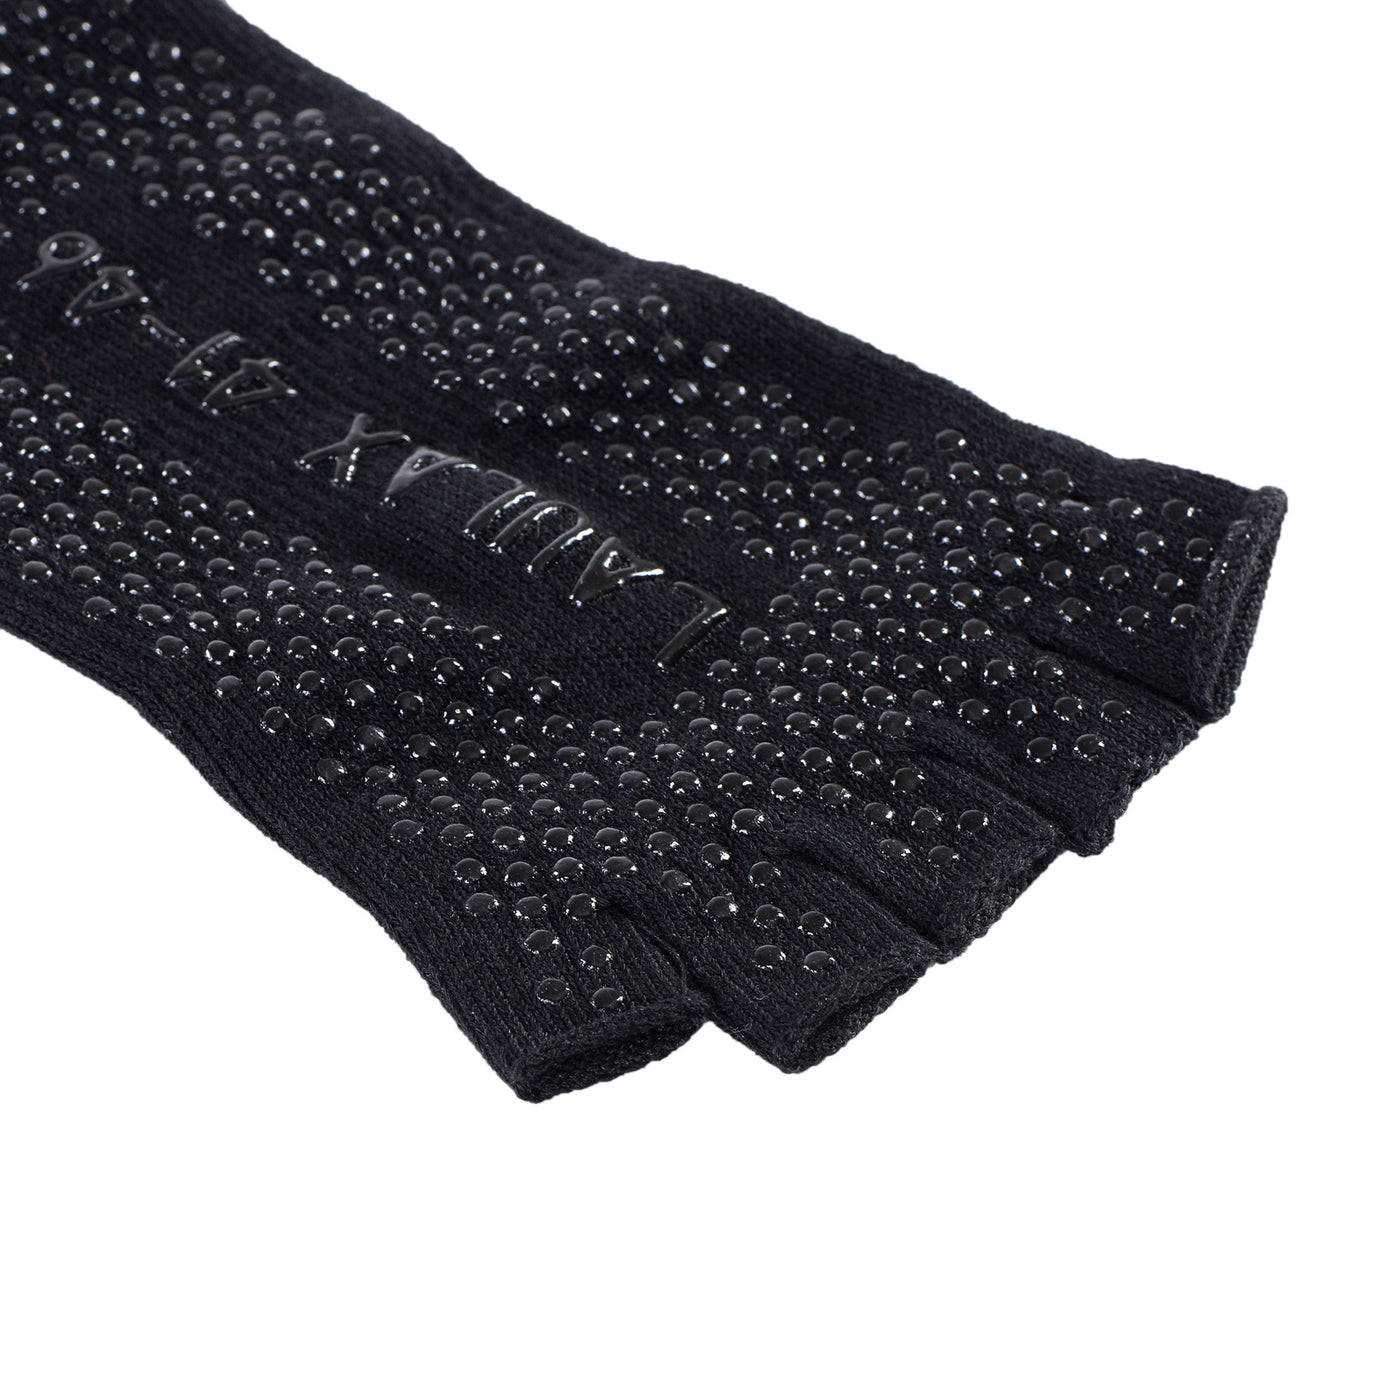 Laulax 2 Pairs Mens High Quality Professional Anti Slip Half Toe Yoga Socks, Black, Size UK 7 - 11 / Europe 41 - 46